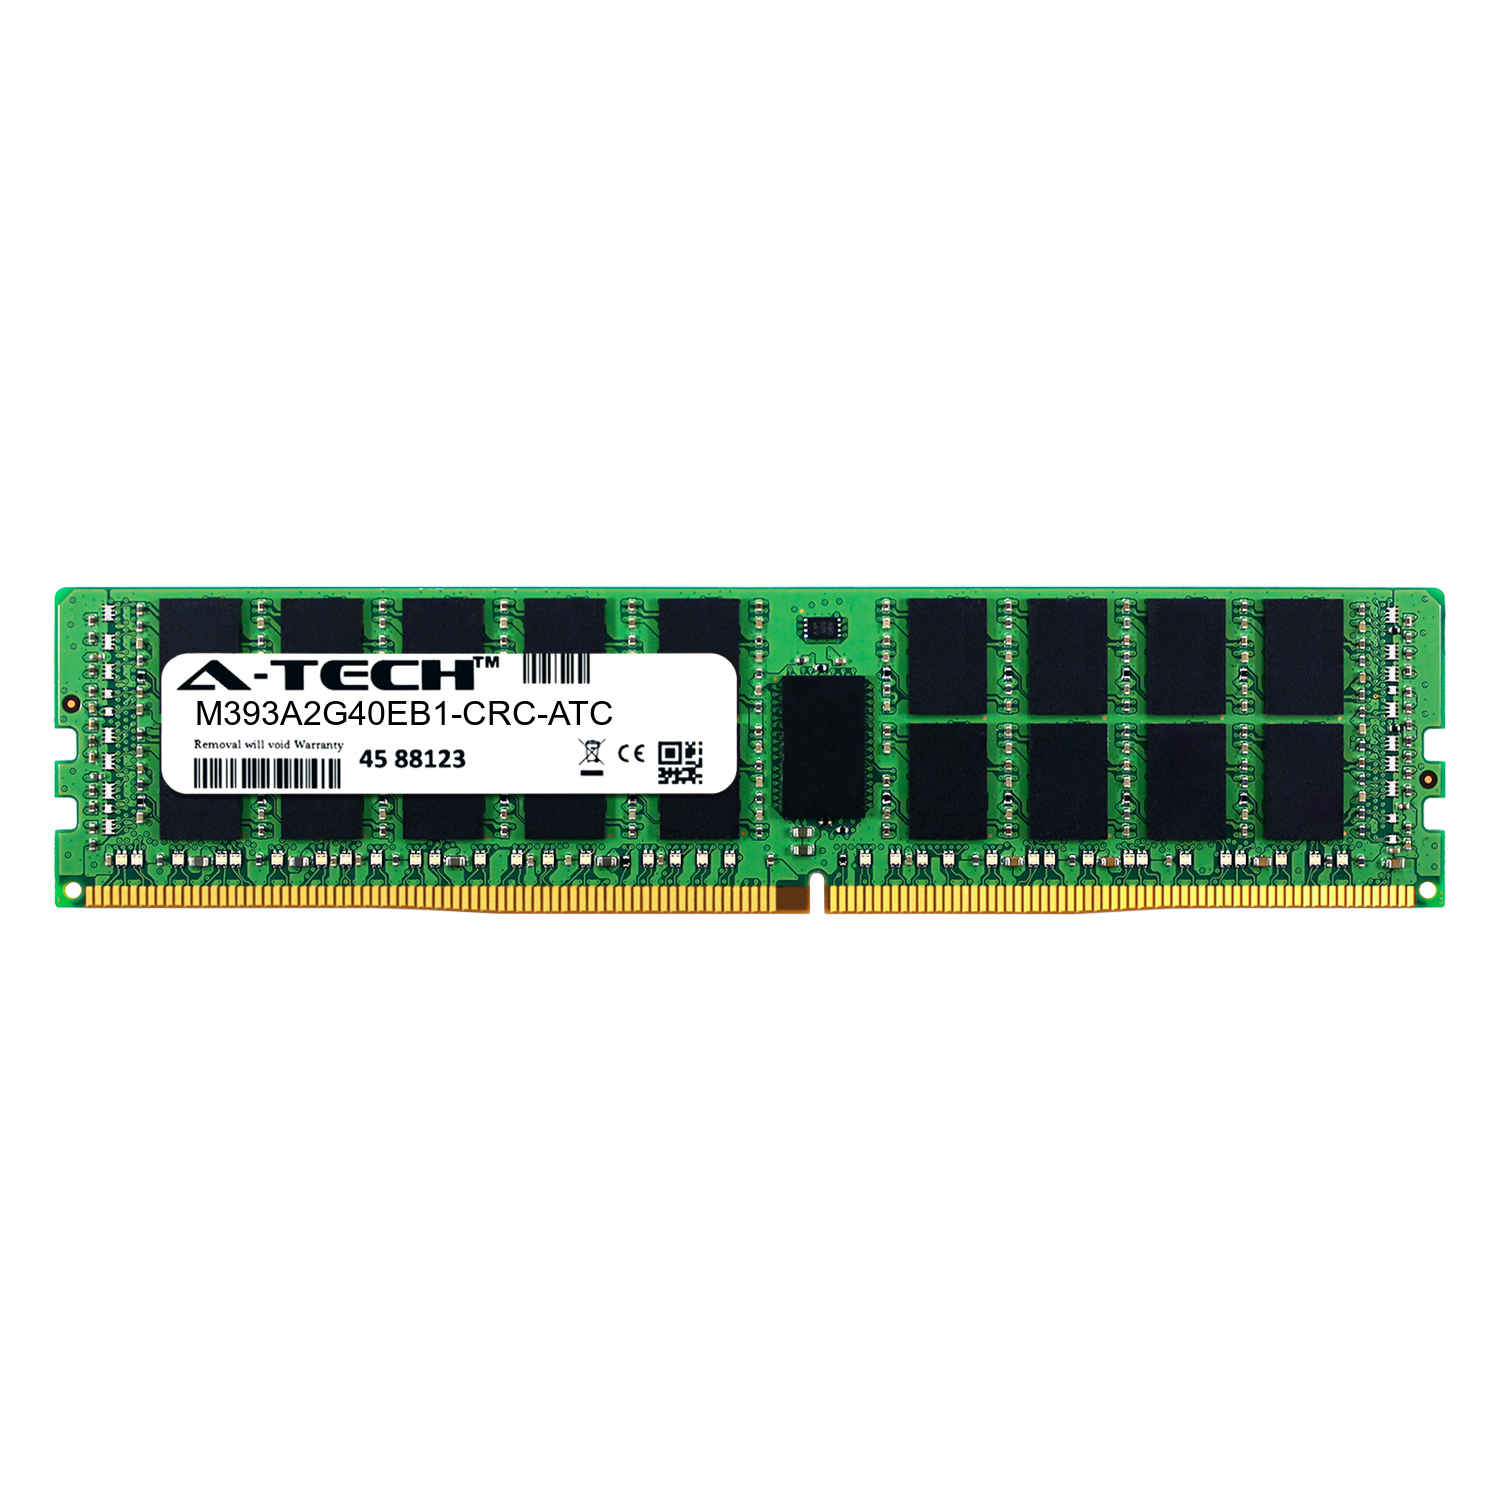 A-Tech 16GB Replacement for Samsung M393A2G40EB1-CRC M393A2G40EB1-CRC-ATC Single Server Memory Ram Stick DDR4 2400MHz PC4-19200 ECC Registered RDIMM 2rx4 1.2v 